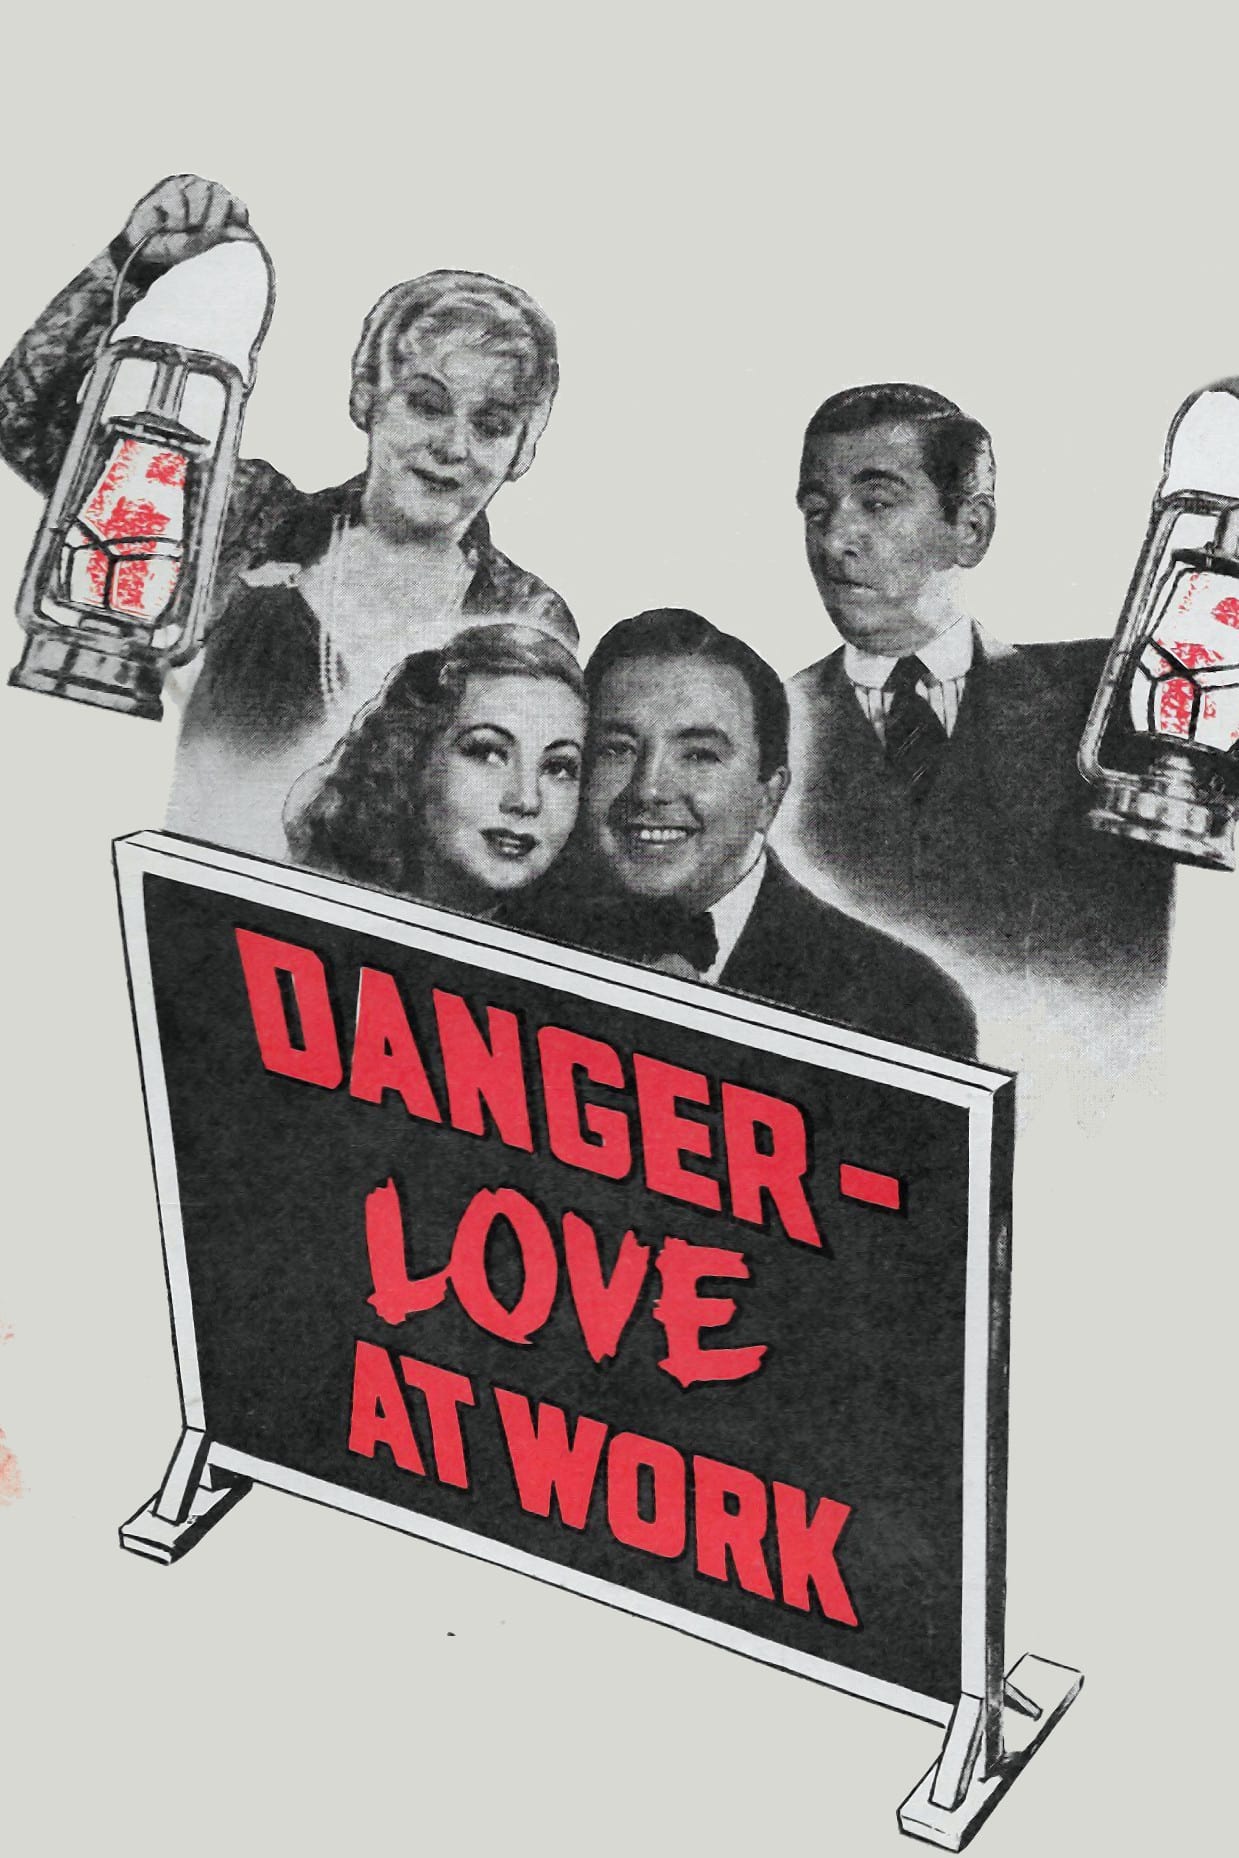 Danger - Love at Work (1937)